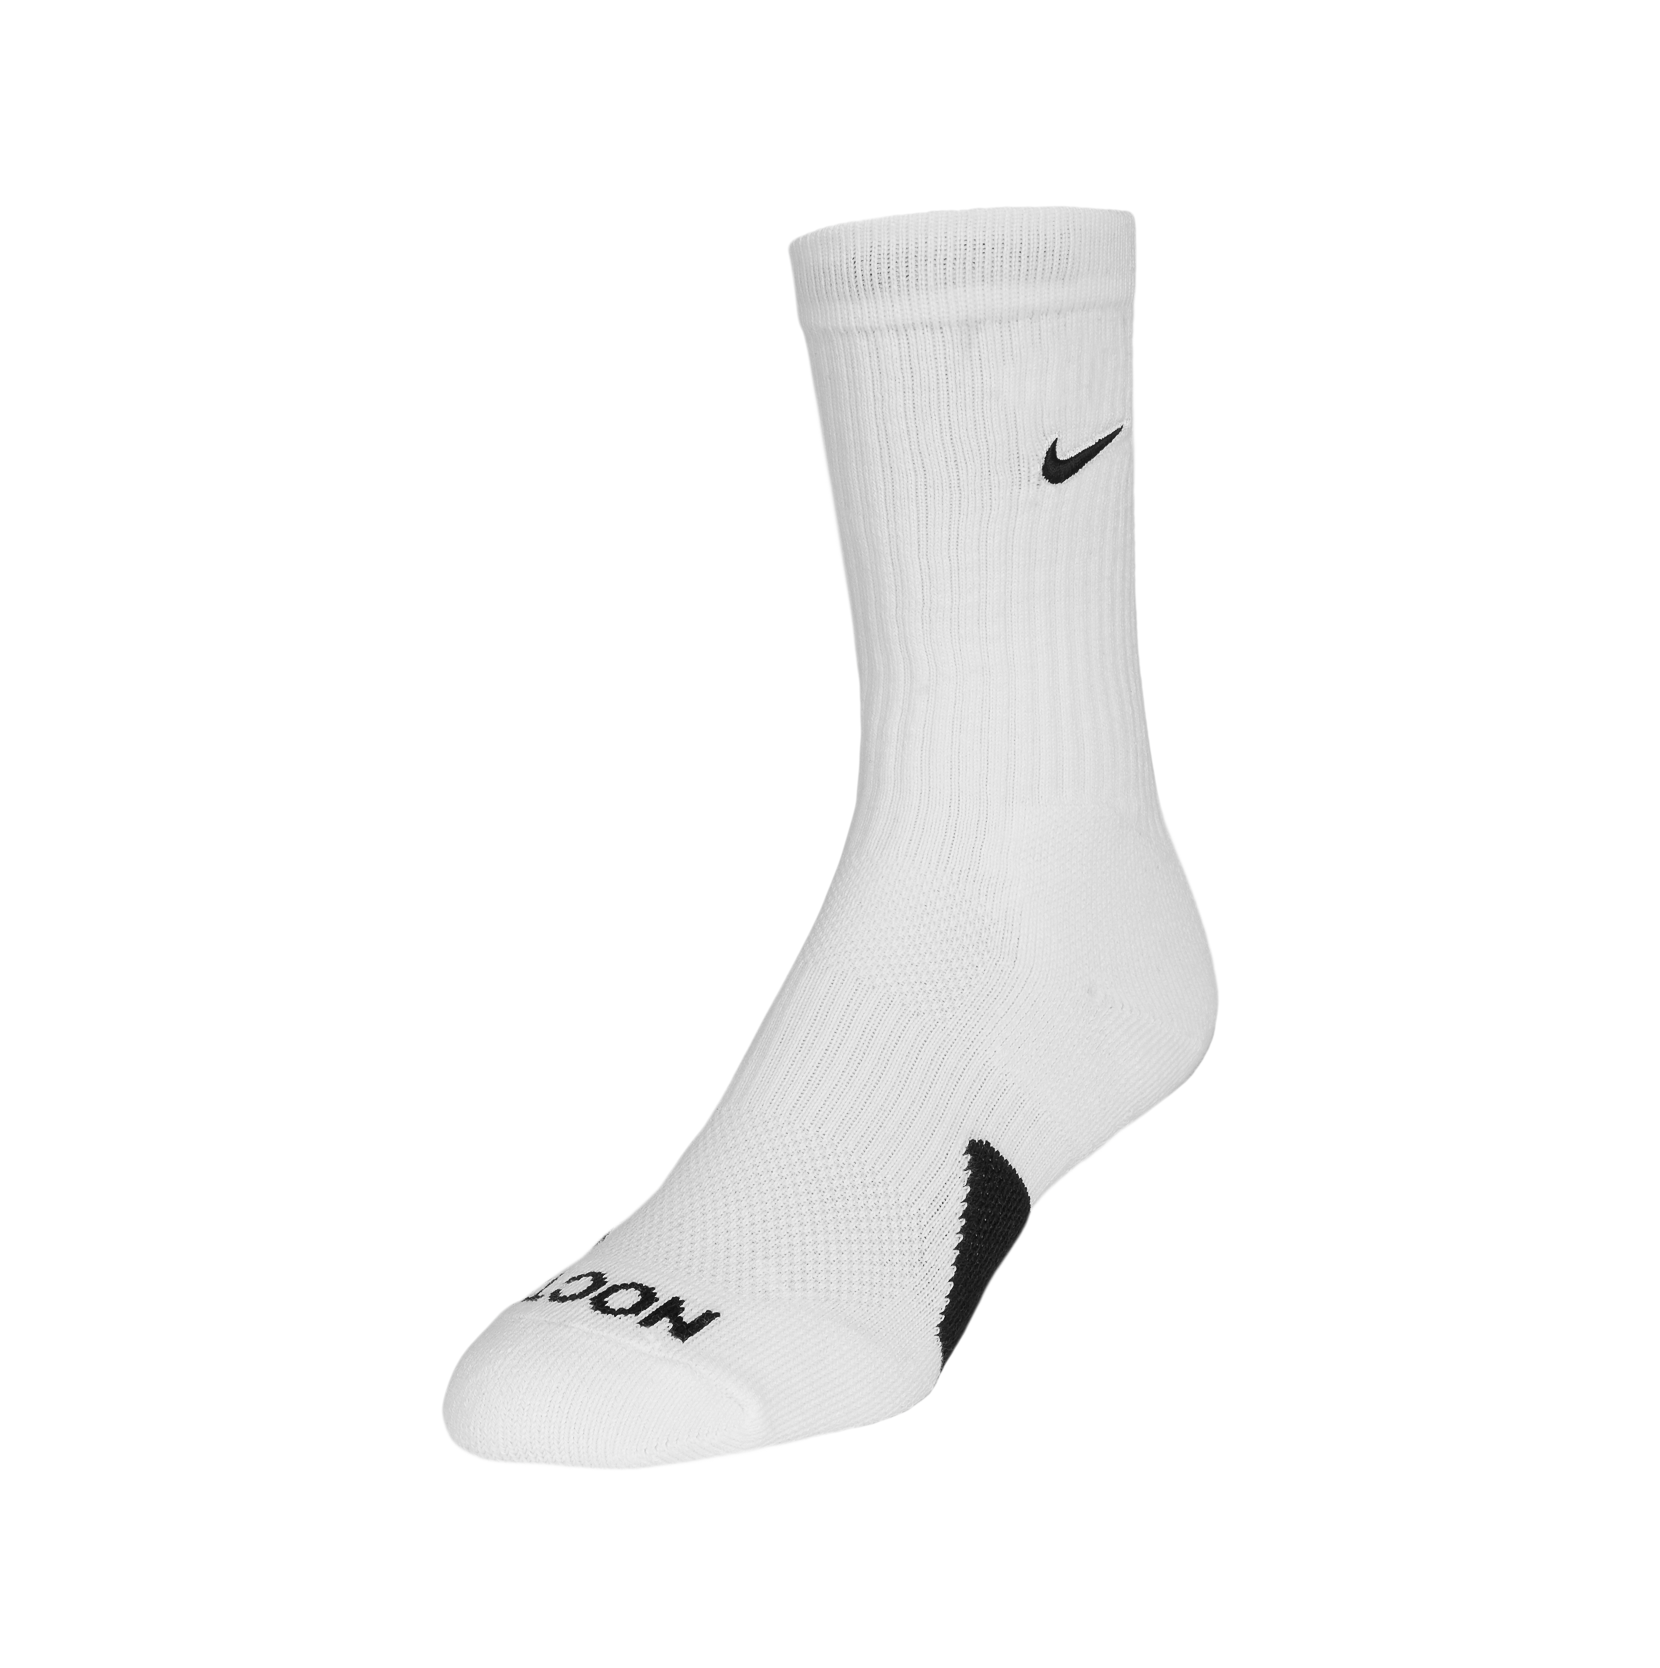 Nike Tube Socks 26” Large Over The Calf Basketball White With